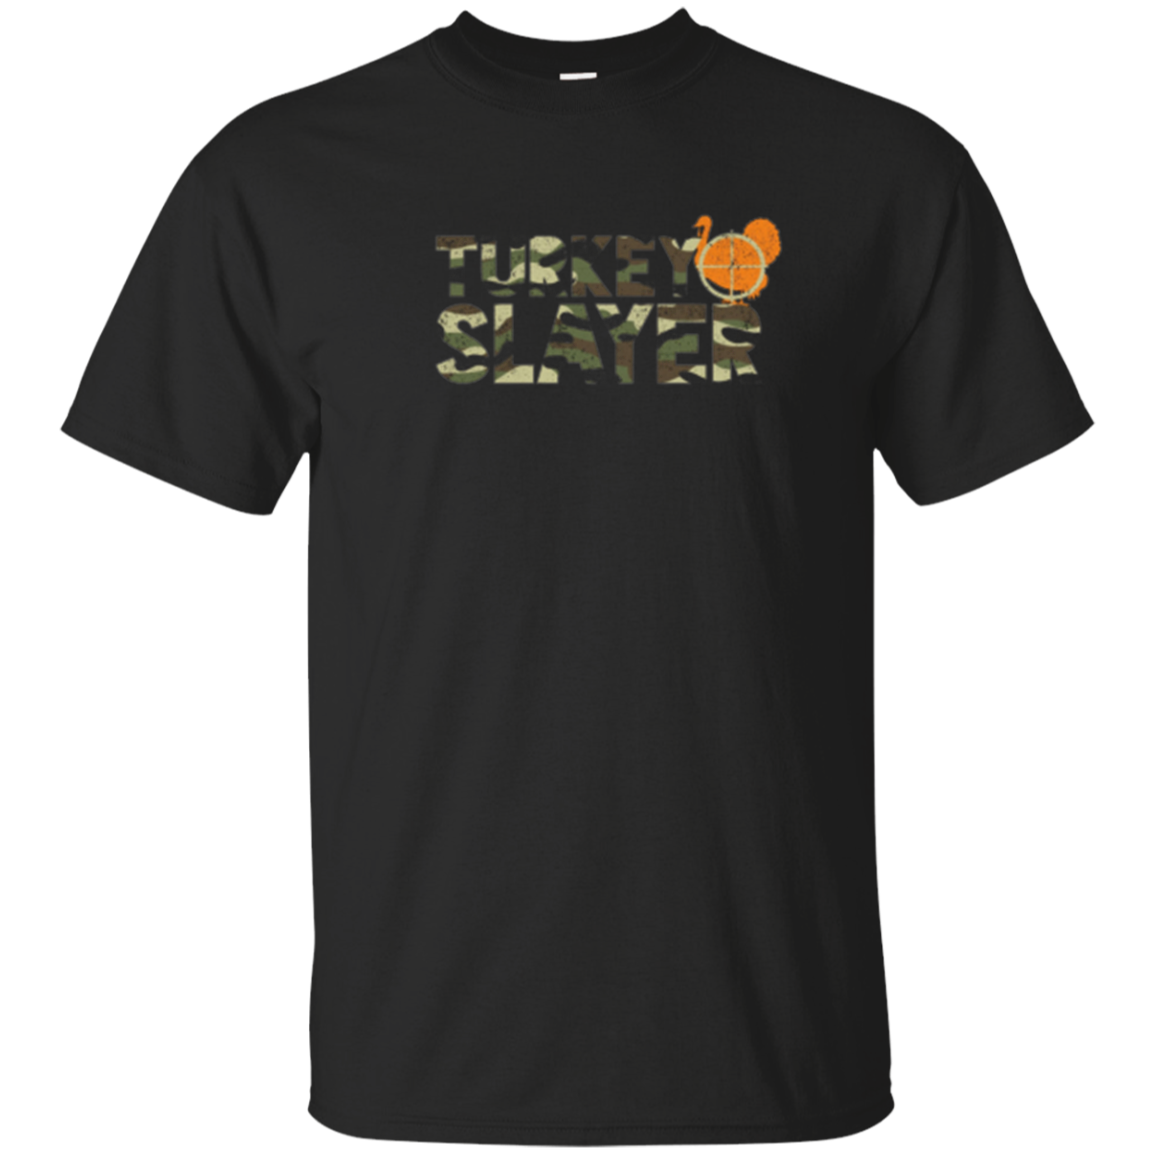 Turkey Slayer Camouflage Funny Bird Hunting Humor T-shirt